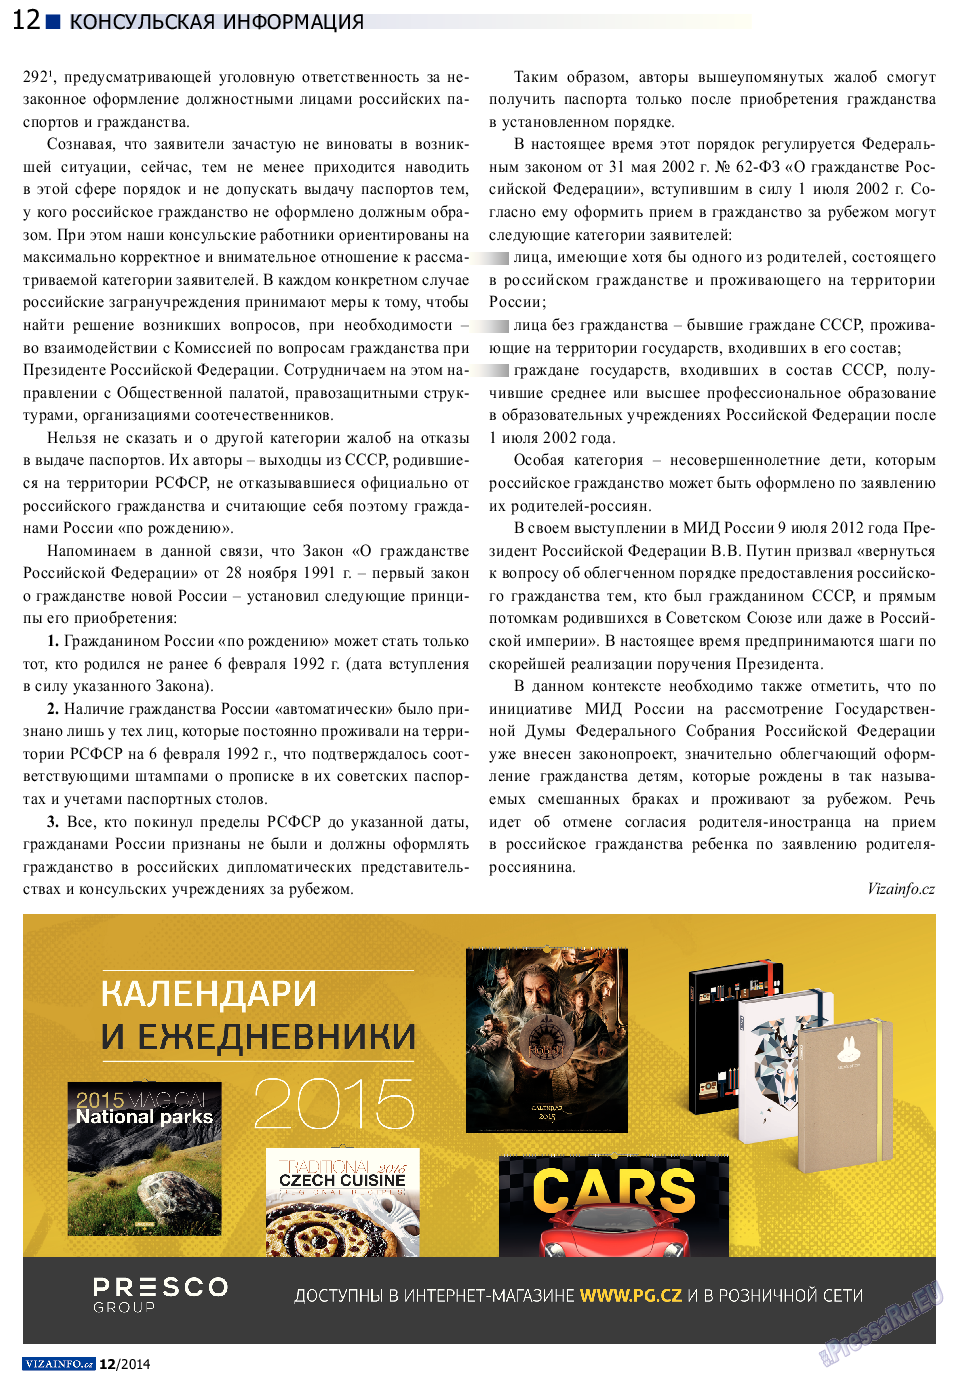 Vizainfo.cz, газета. 2014 №63 стр.12